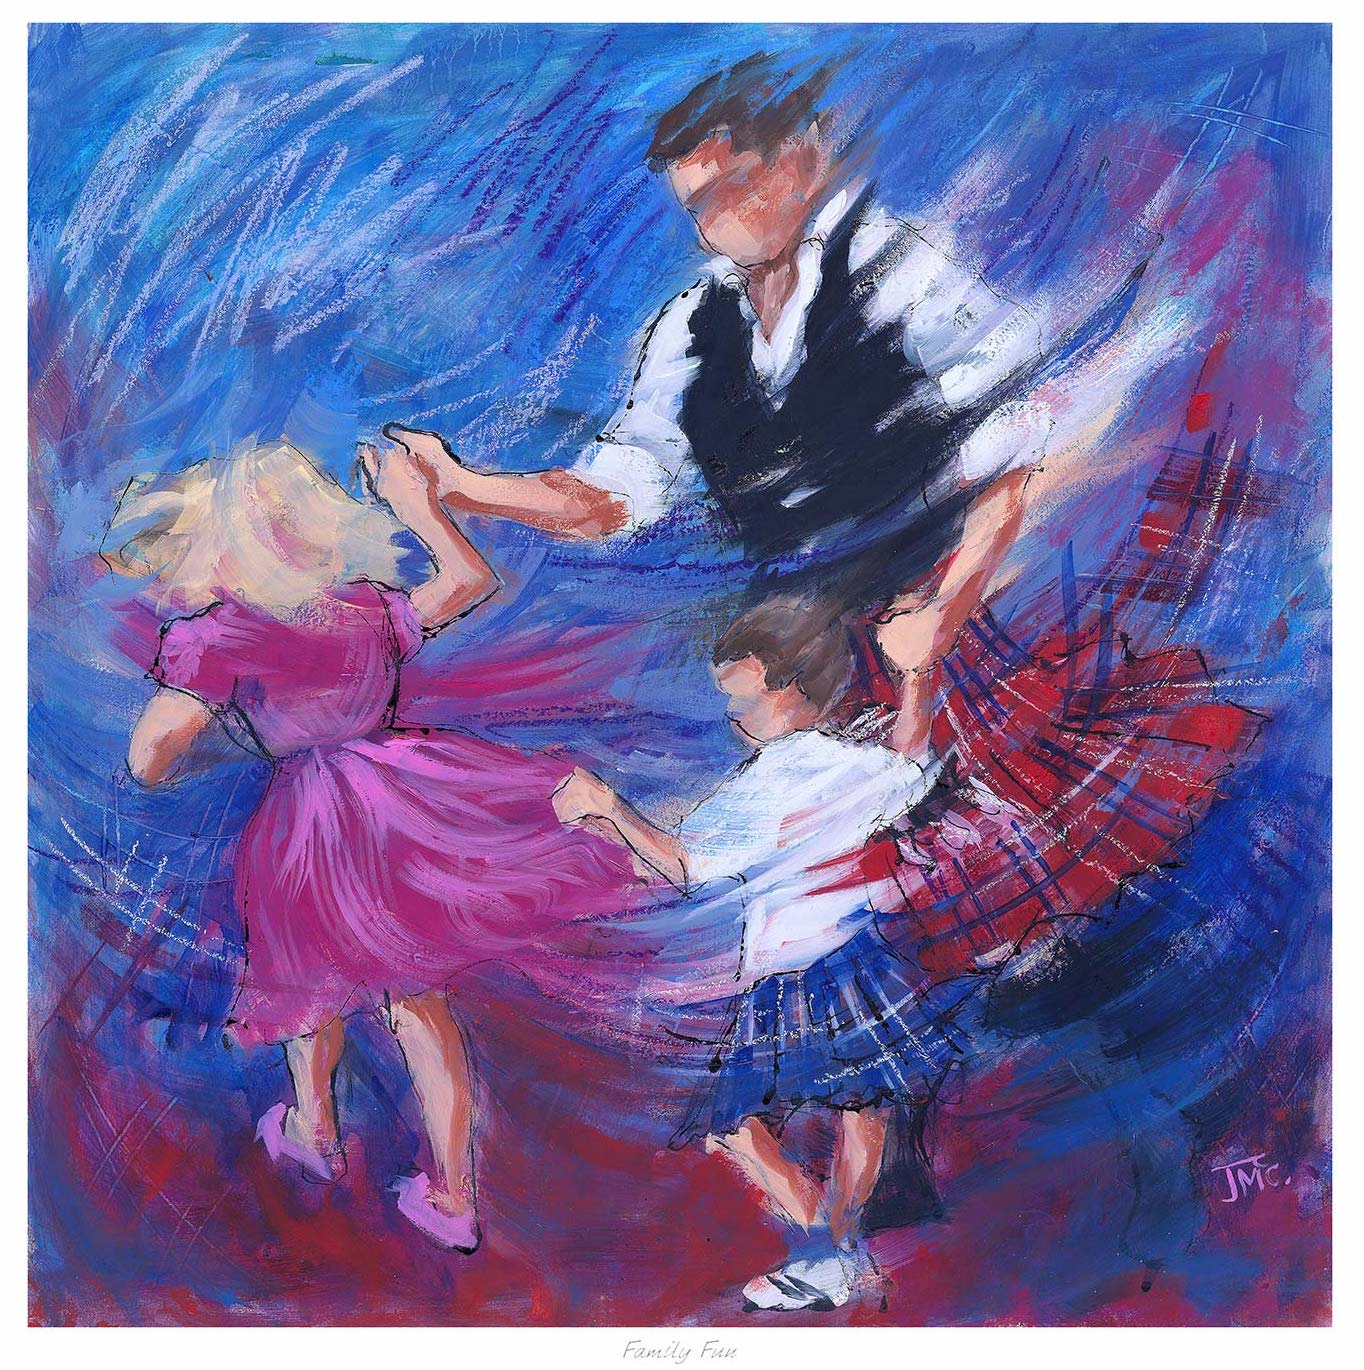 Family Fun Ceilidh Dancing Art Print by Janet McCrorie